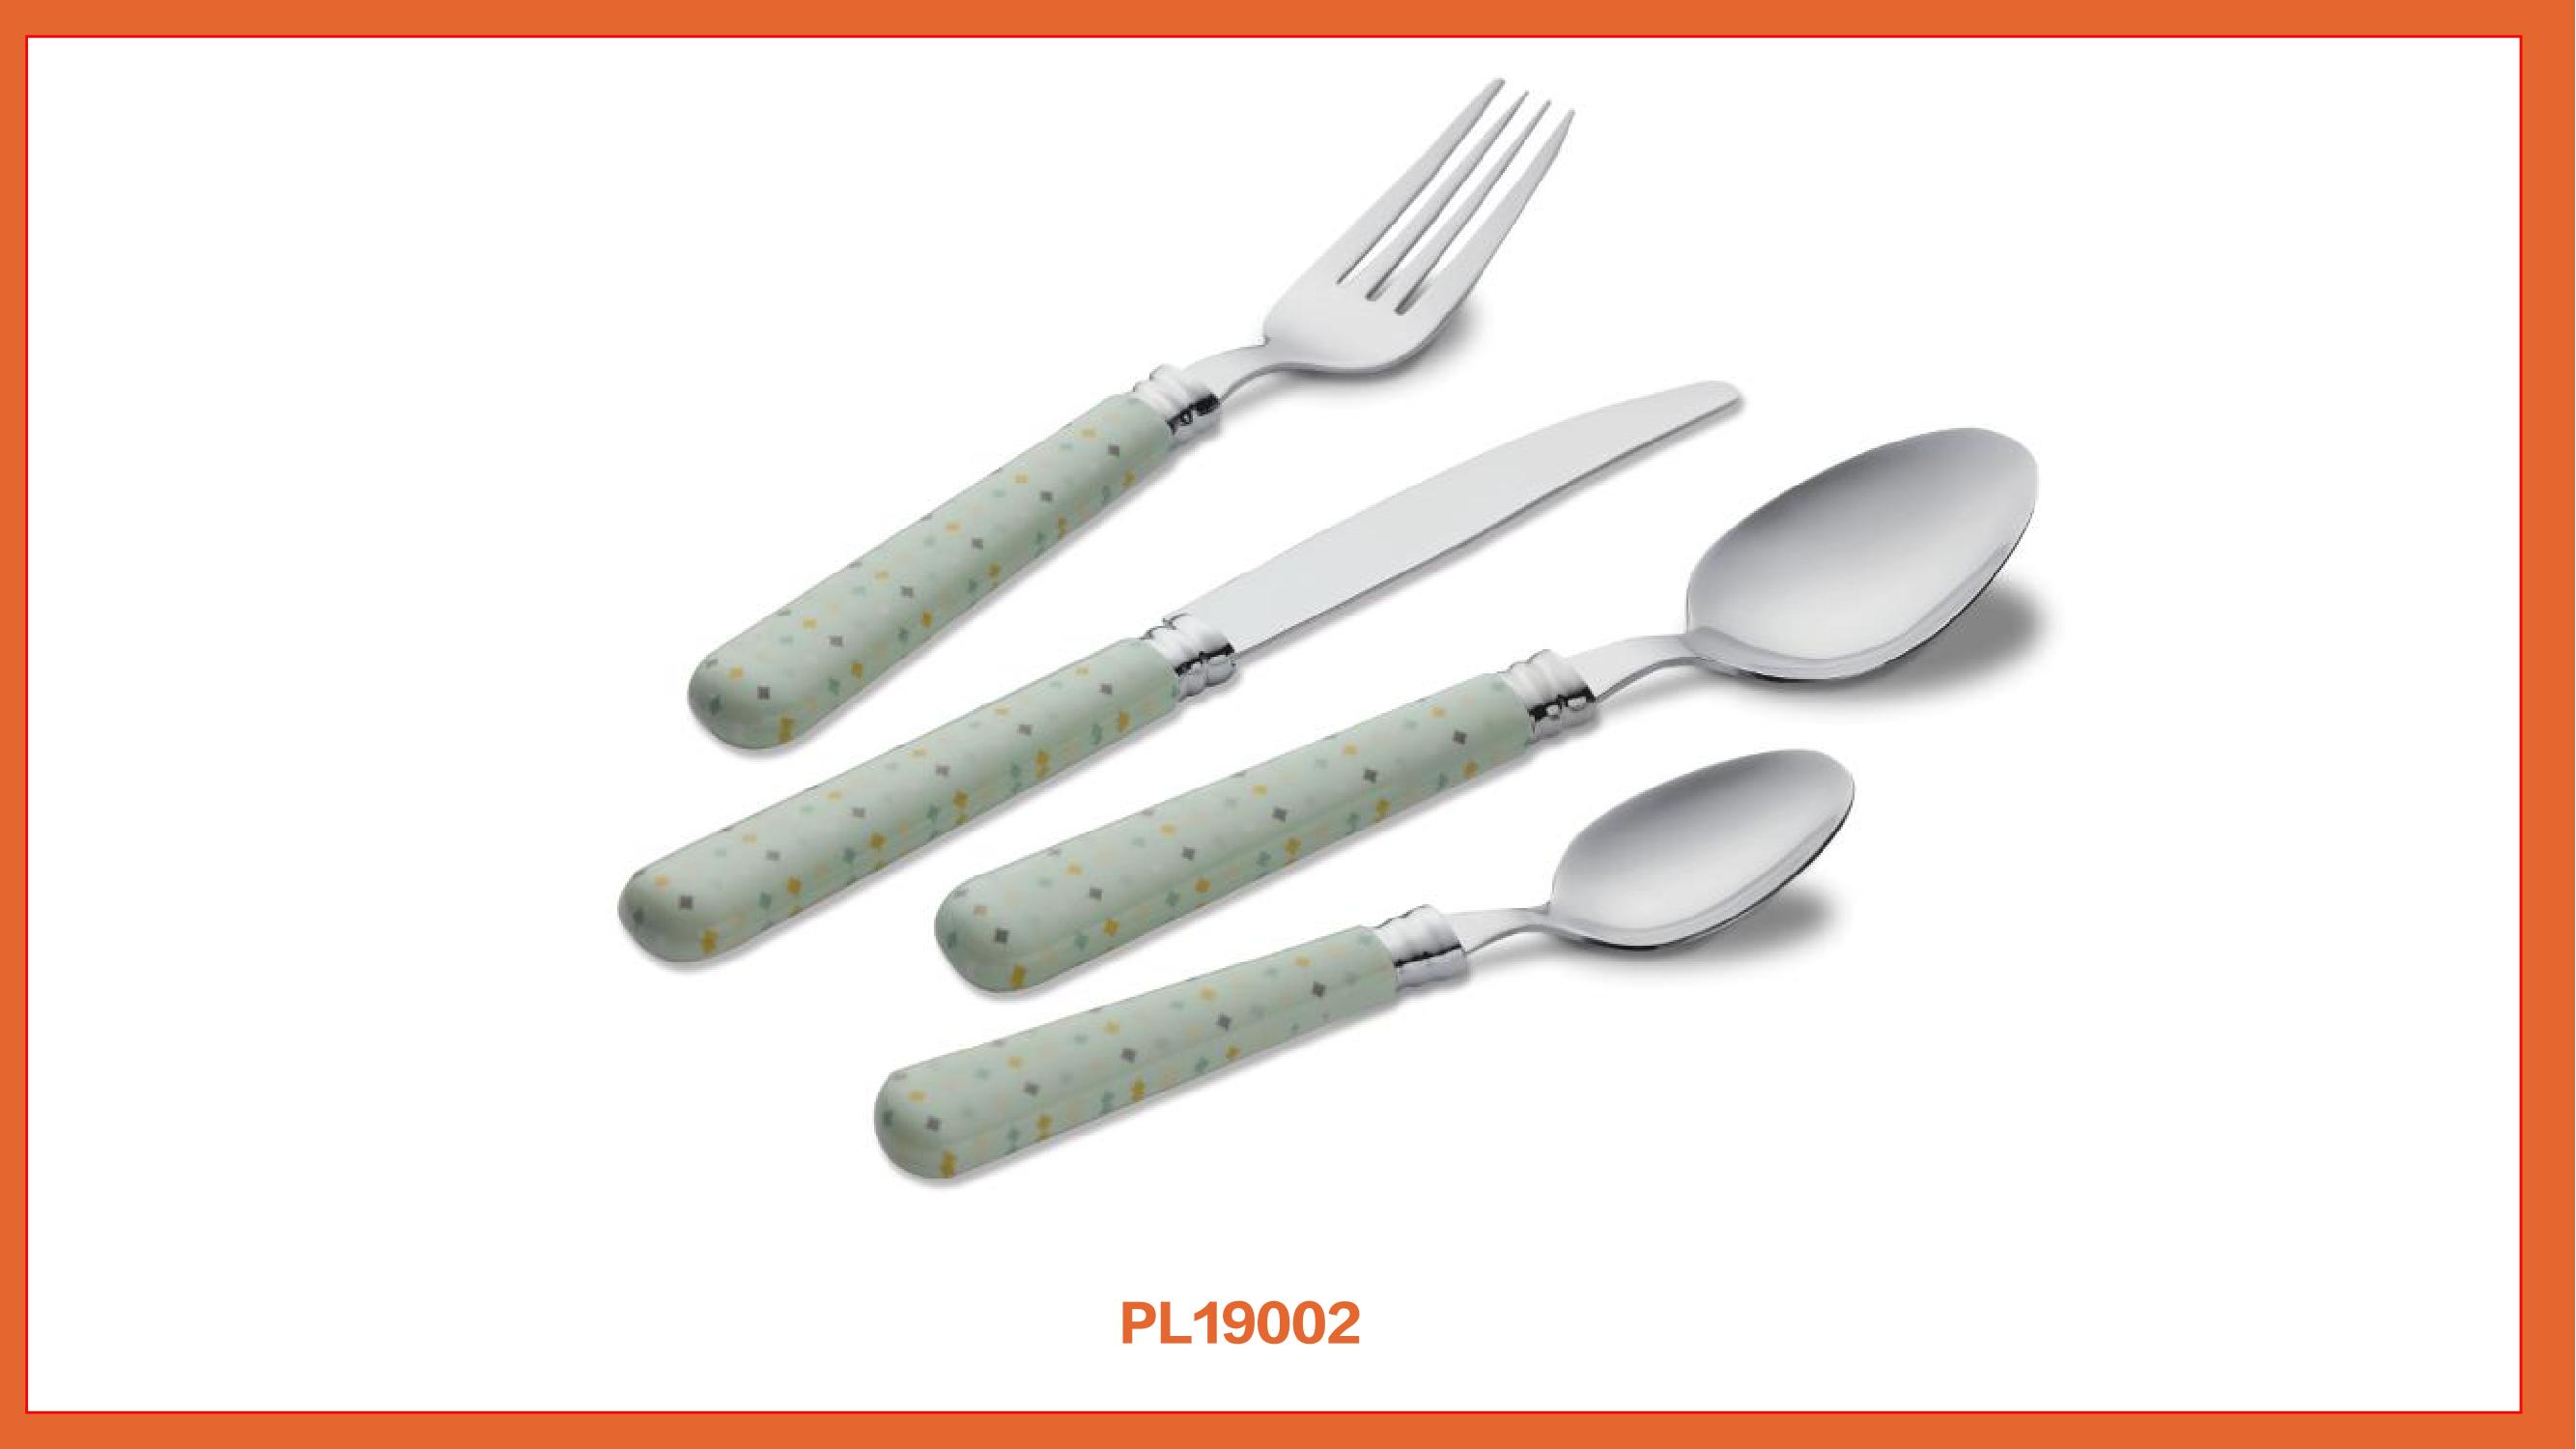 catalogue of plastic handle cutlery_6.jpg